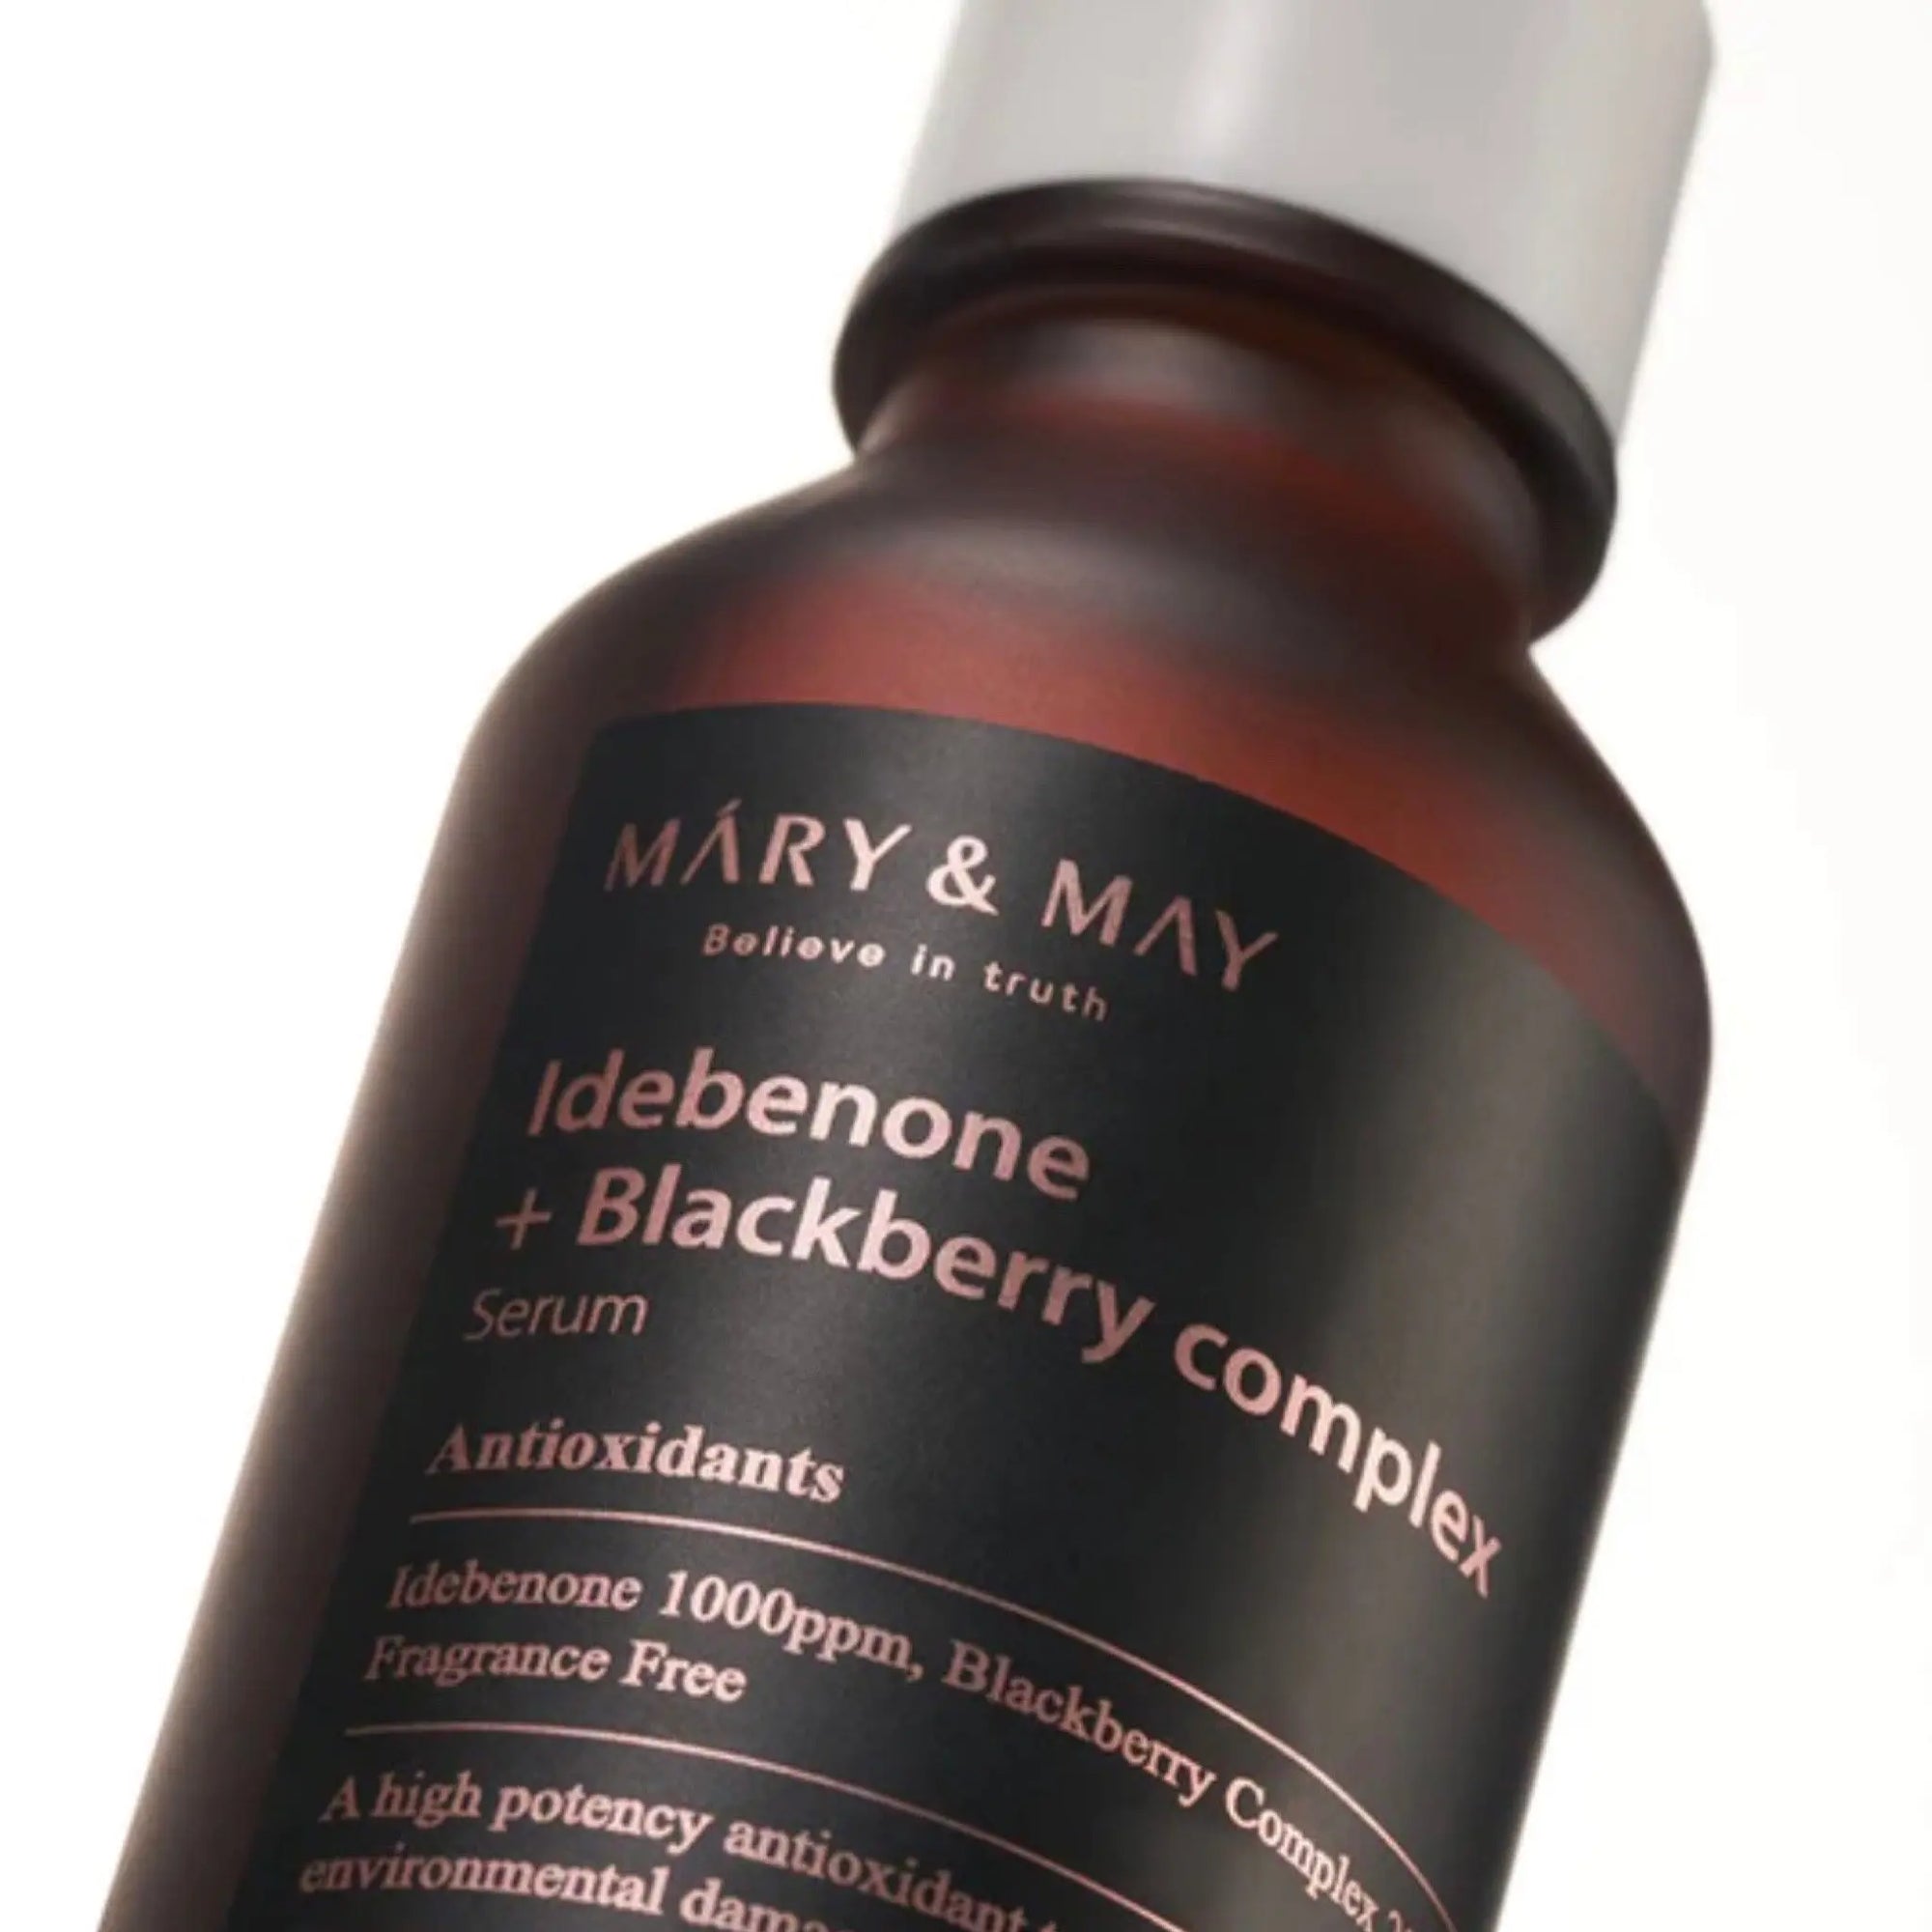 Mary & May - Idebenone + Blackberry Complex Serum 30mL Mary & May